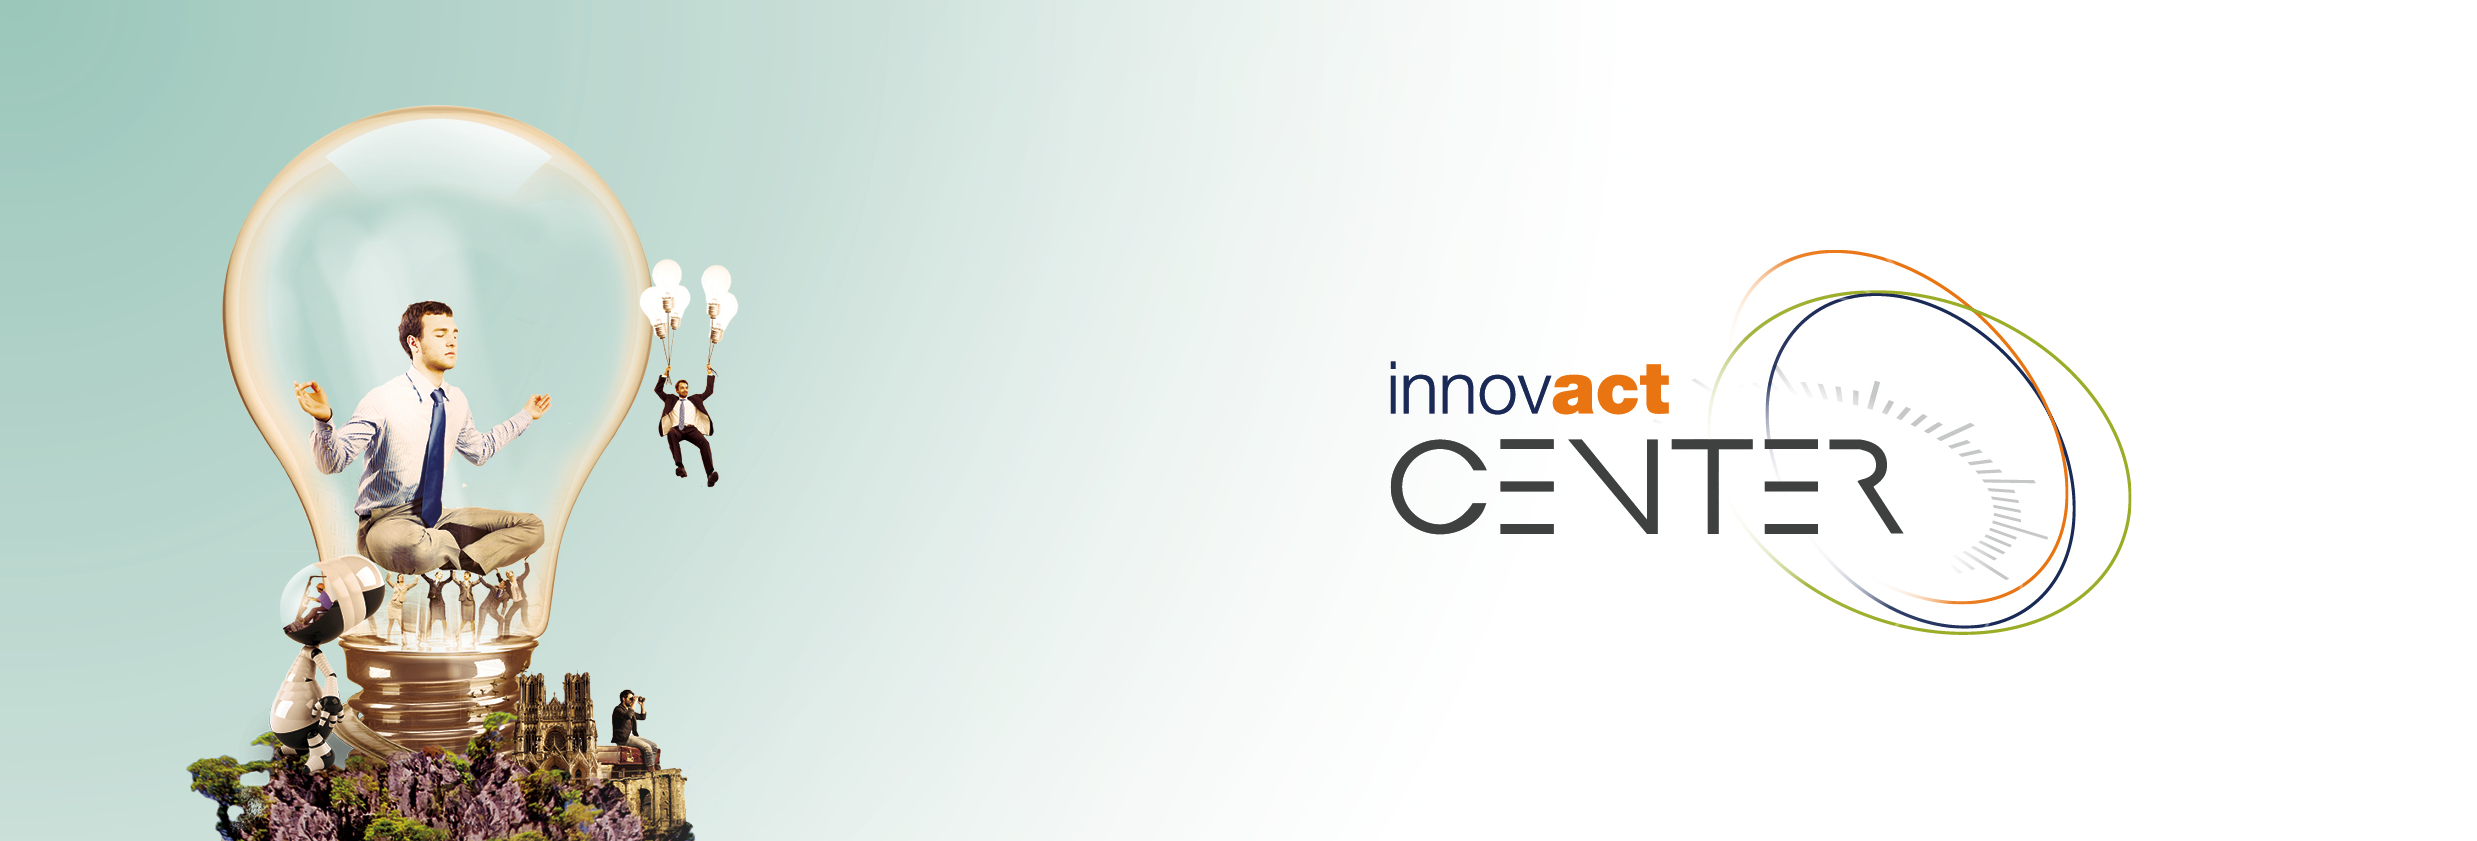 innovact_center